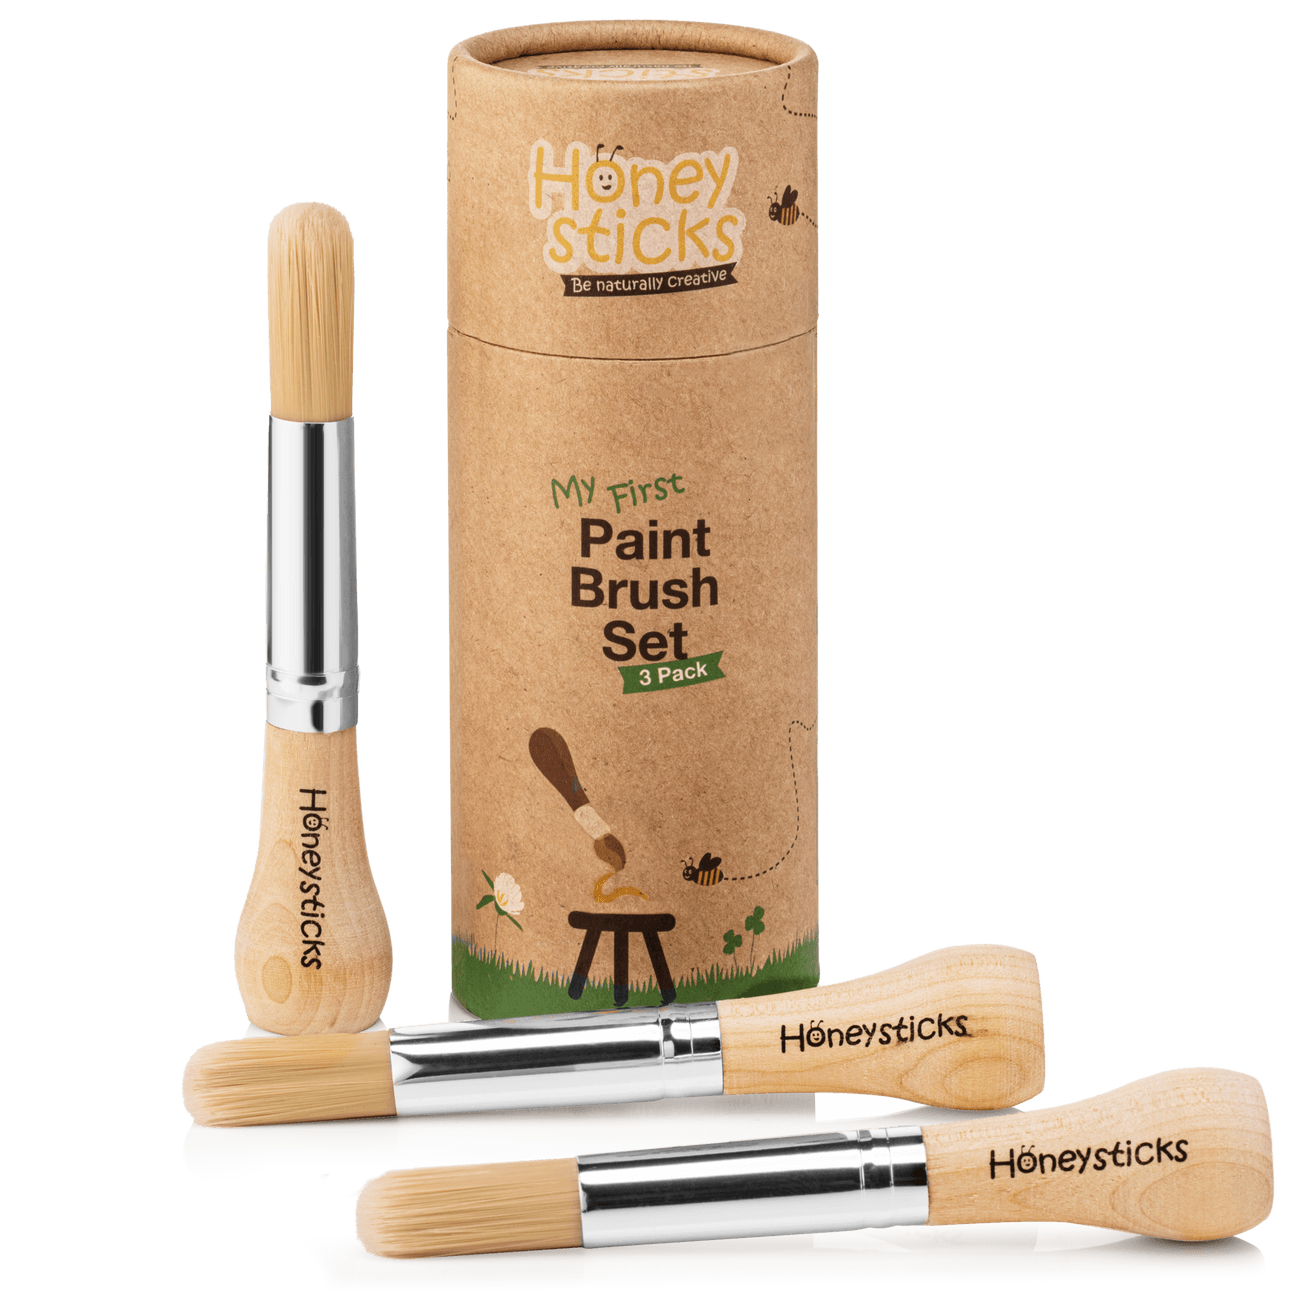 Honeysticks - My First Paint Brush Set - 3 Pack Toys Honeysticks